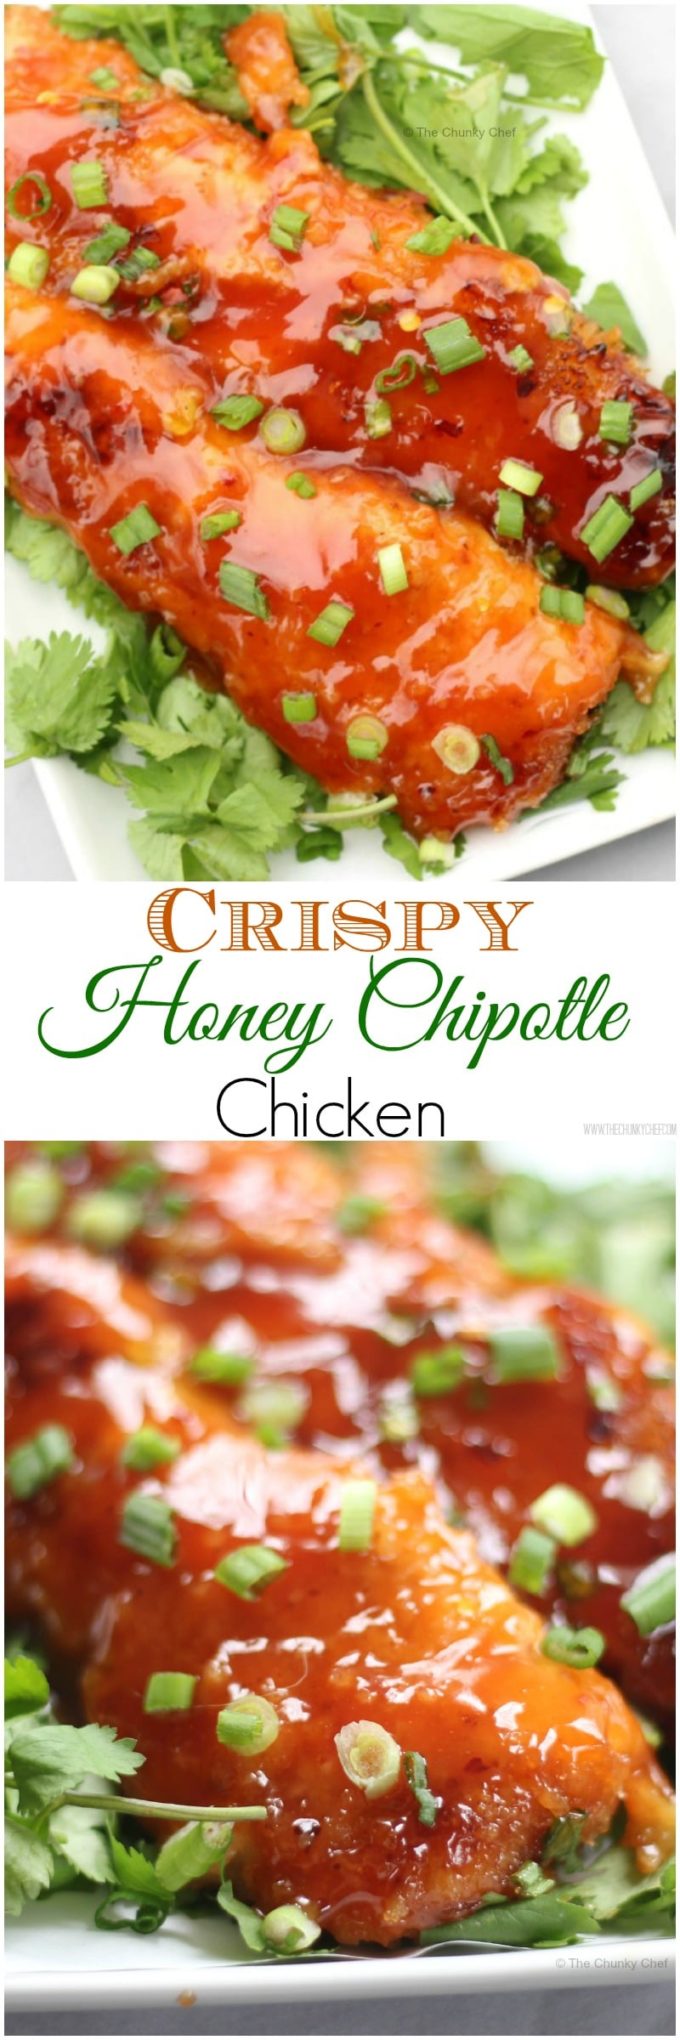 Crispy Honey Chipotle Chicken - The Chunky Chef